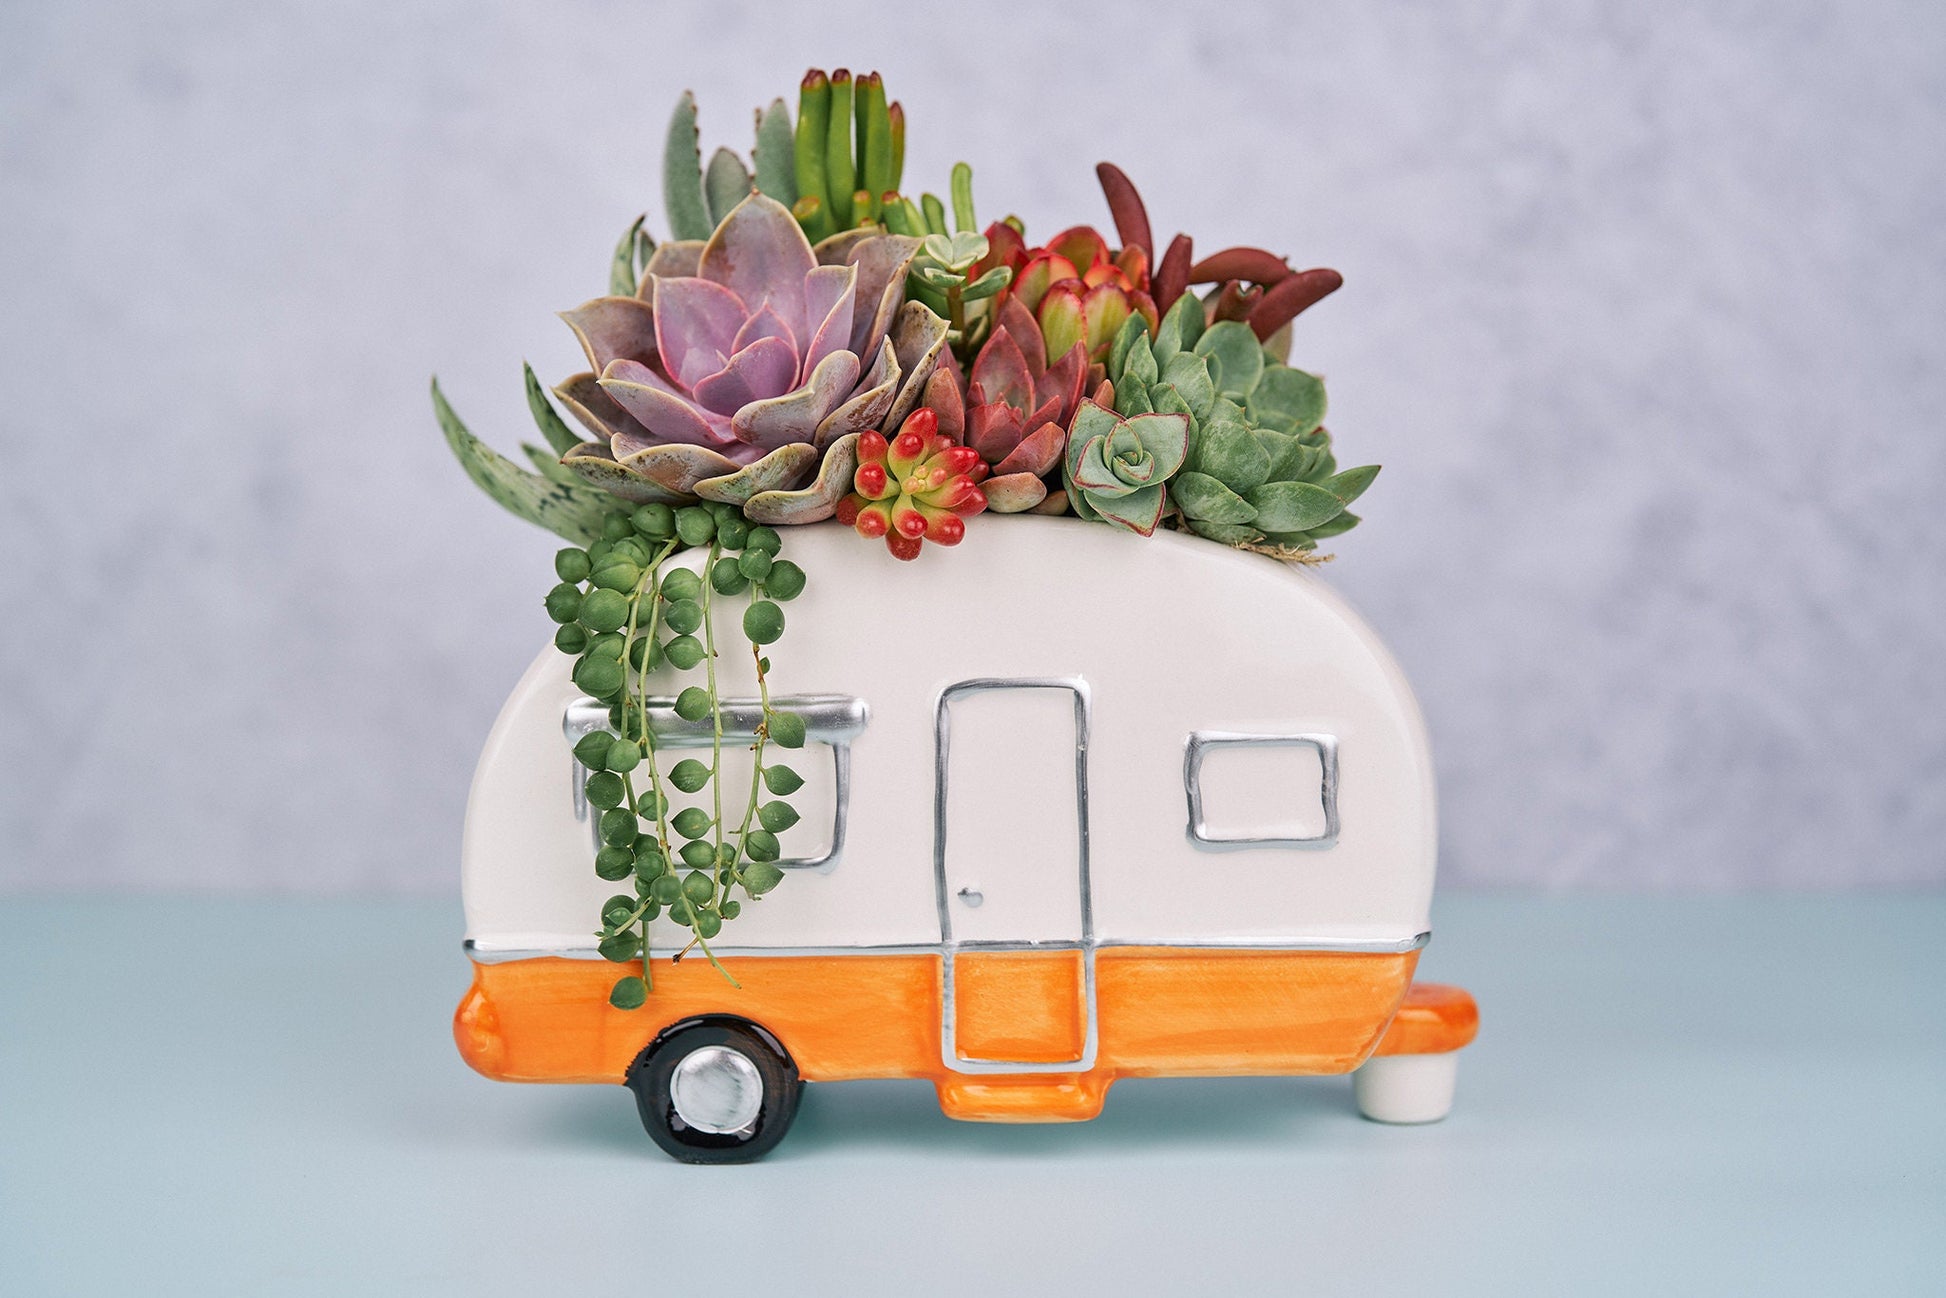 Retro Camper RV Living Succulent Arrangement Gift | Birthday, Celebration, Sympathy, House Warming Living Gift for Plant Lovers